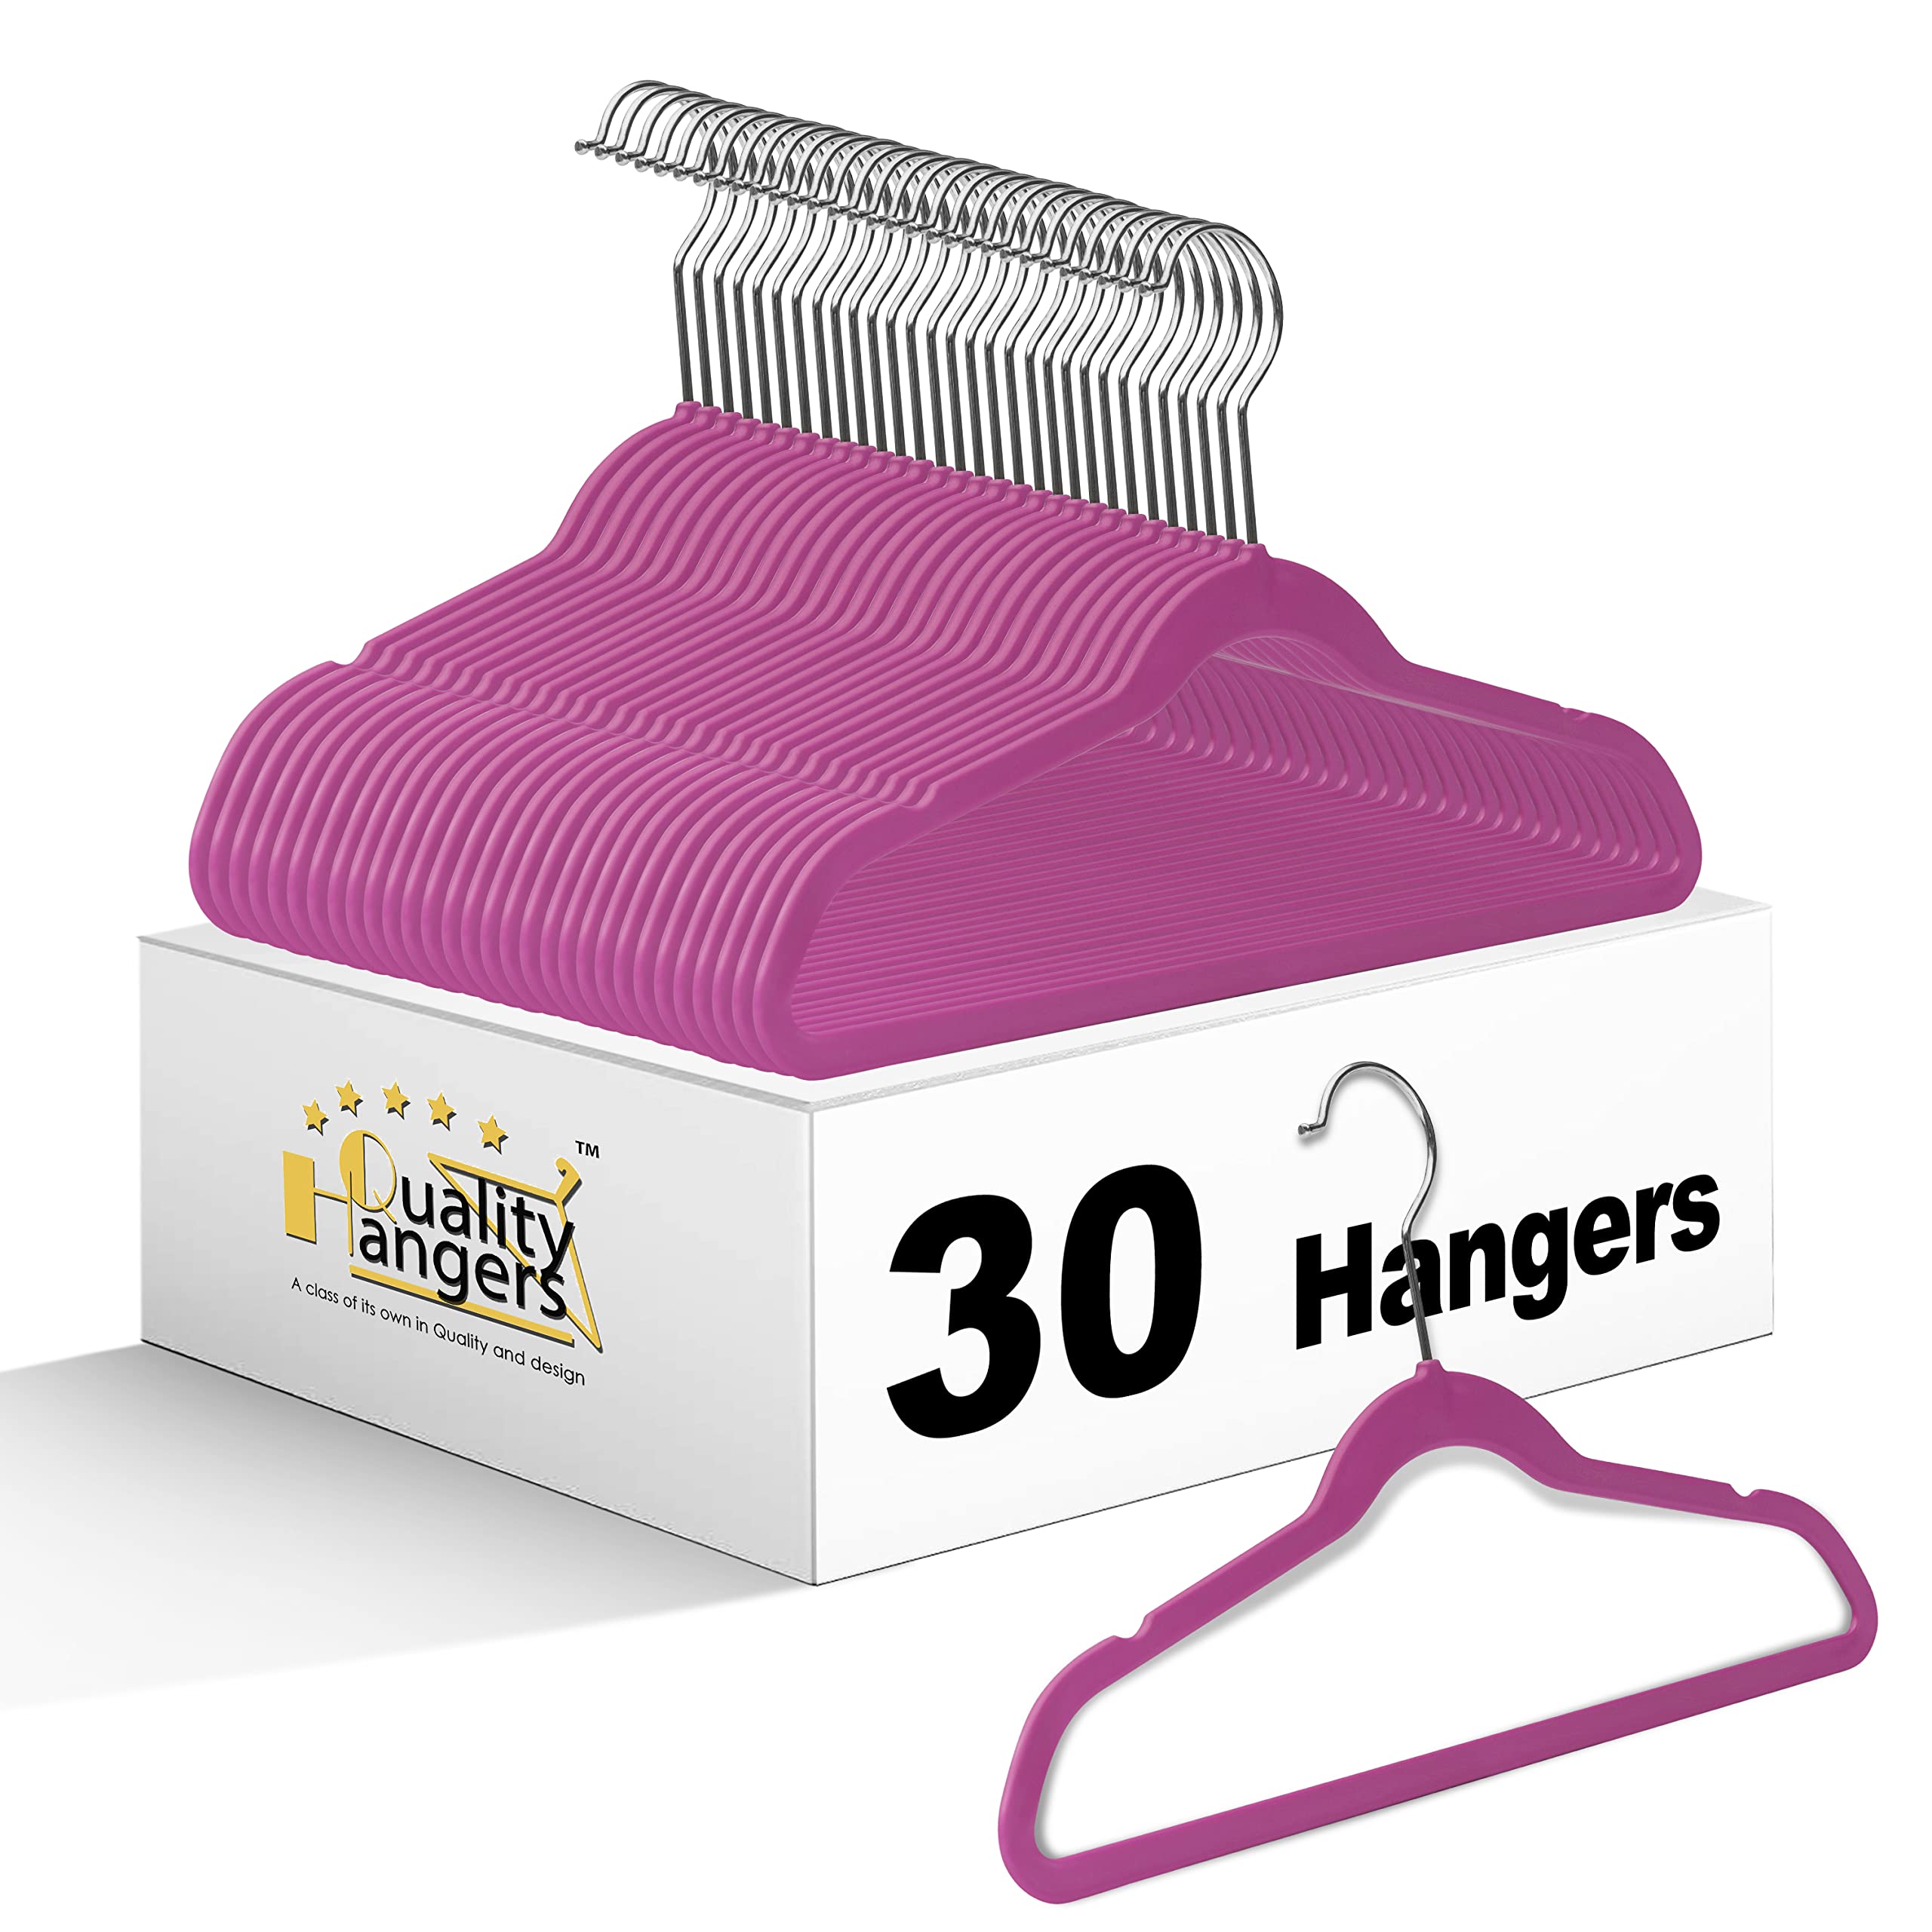 Quality Children's Plastic 30 Pack Non Velvet Non-Flocked Thin Compact Hangers Swivel Hook for Shirts Blouse Coats (Pink, 30)  - Like New